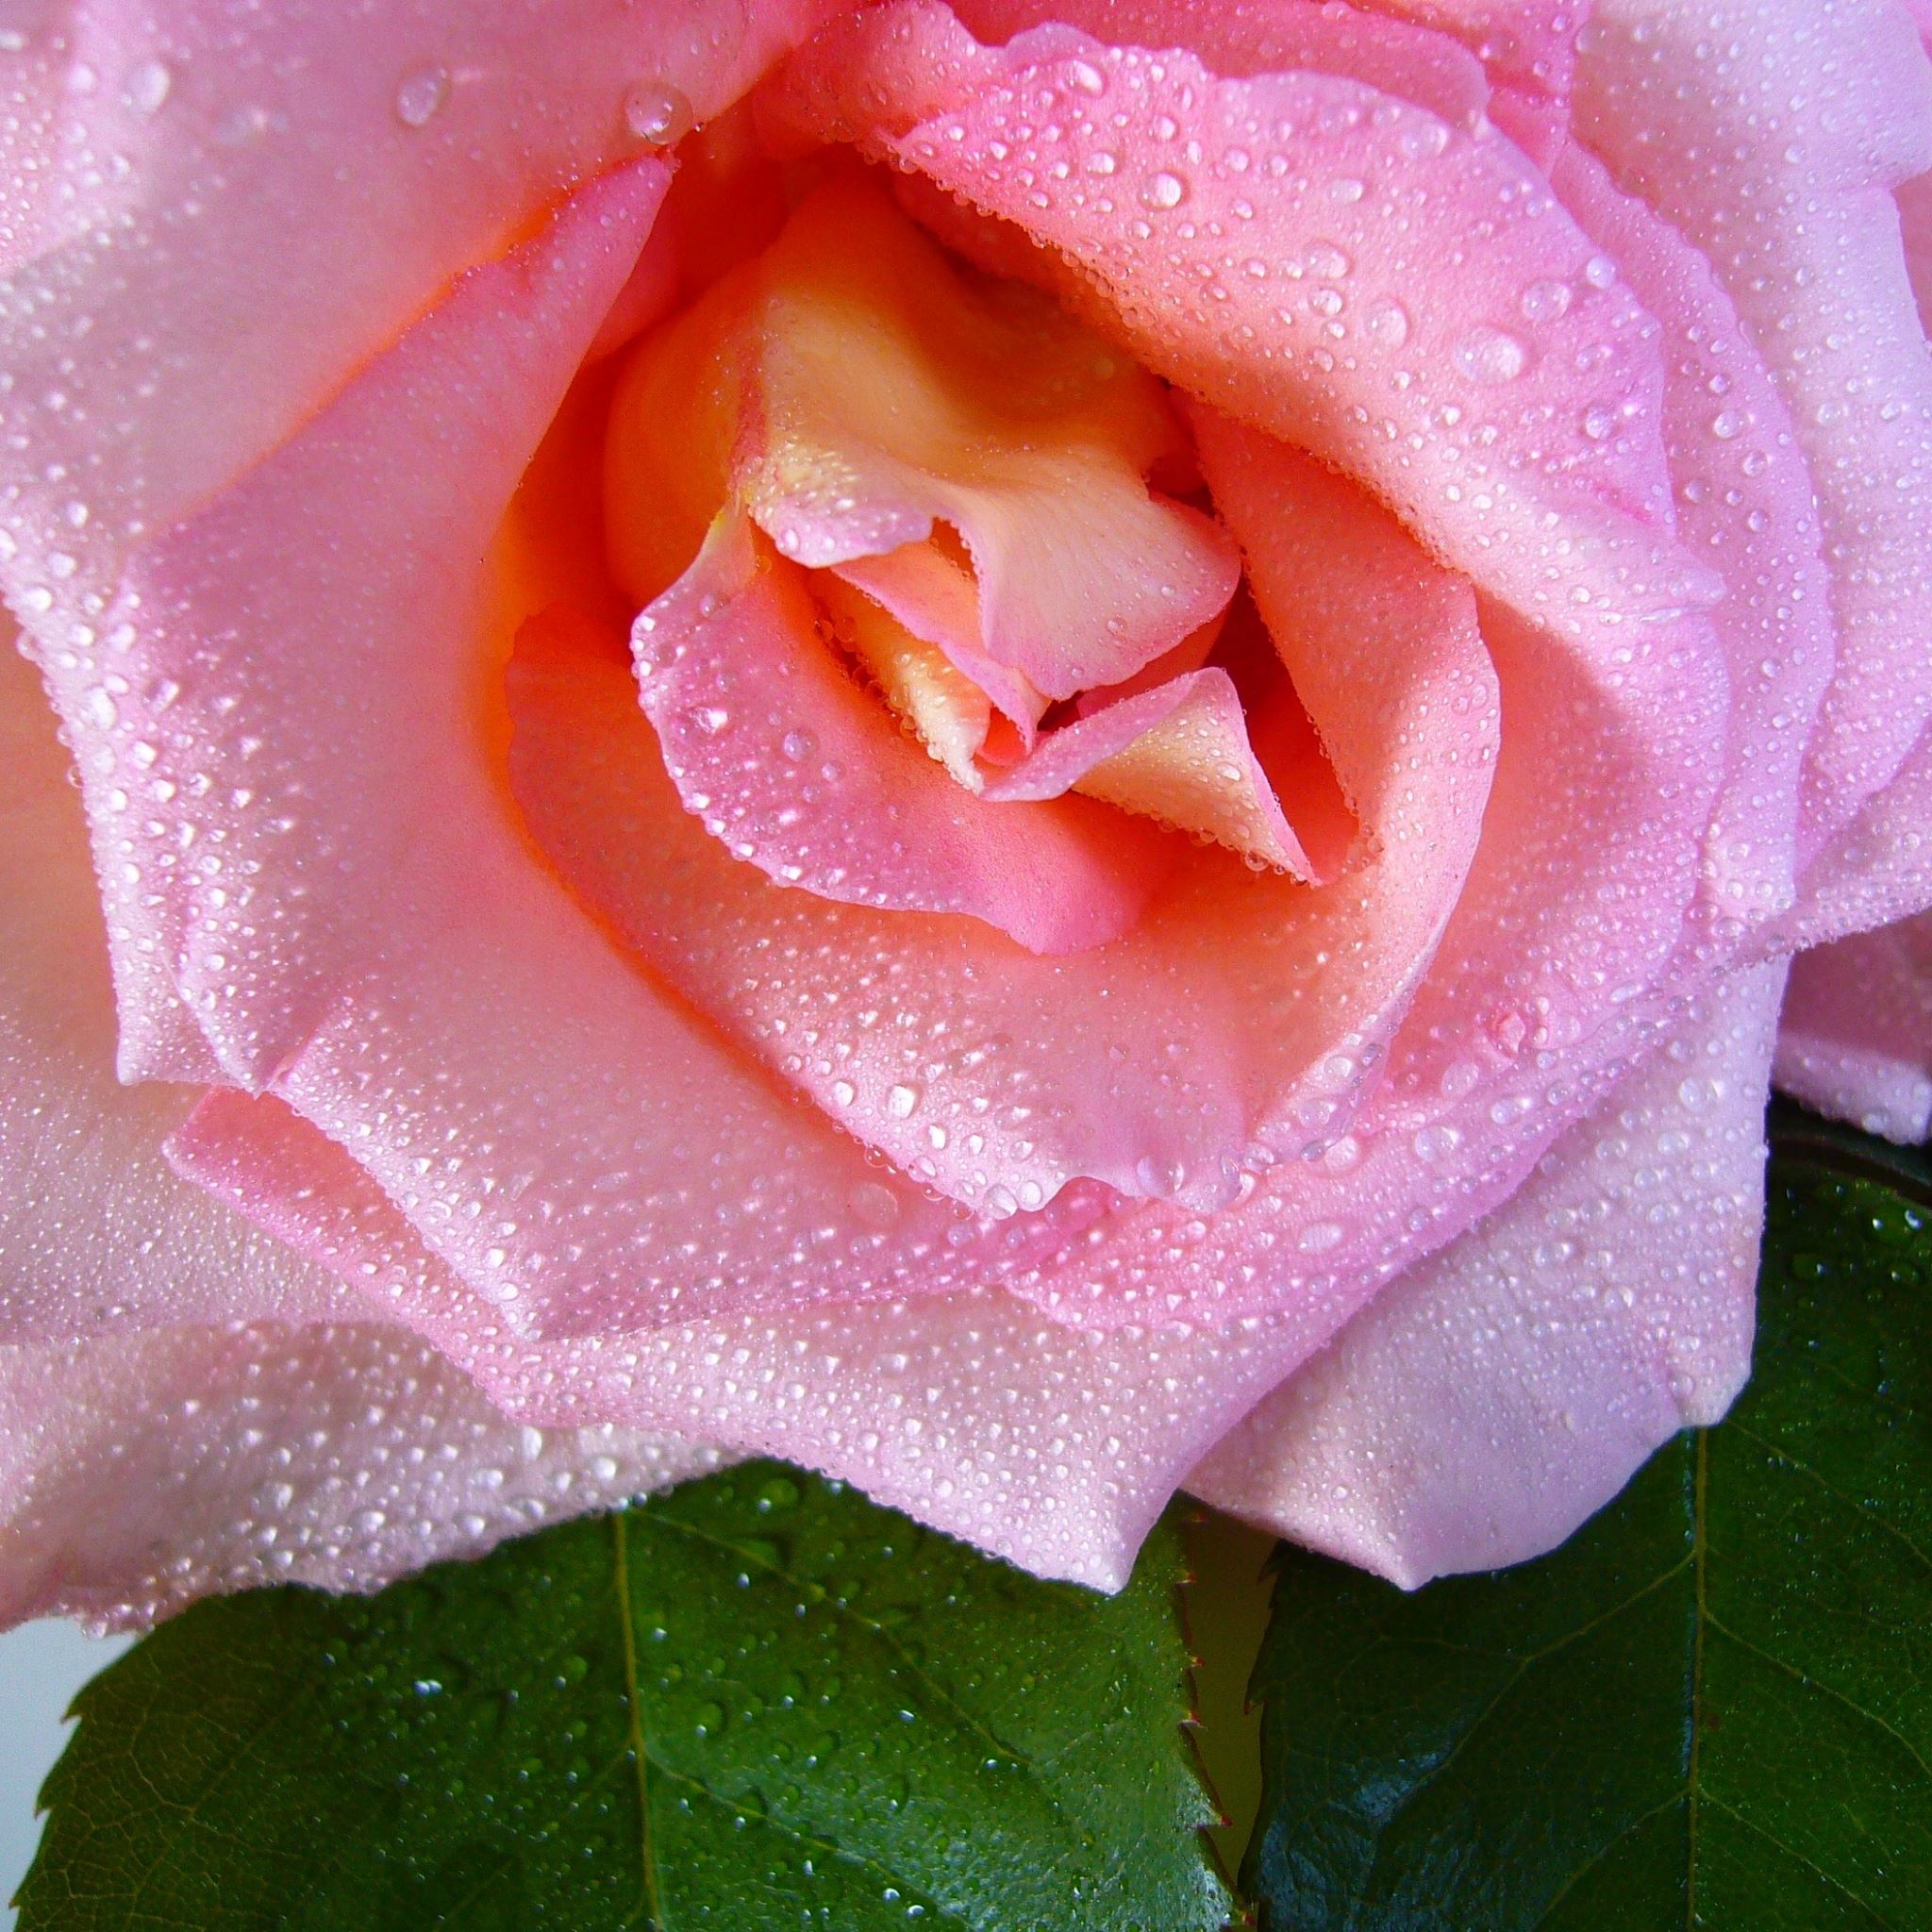 Rose Flower Drops Dew Bud iPad Air wallpaper 